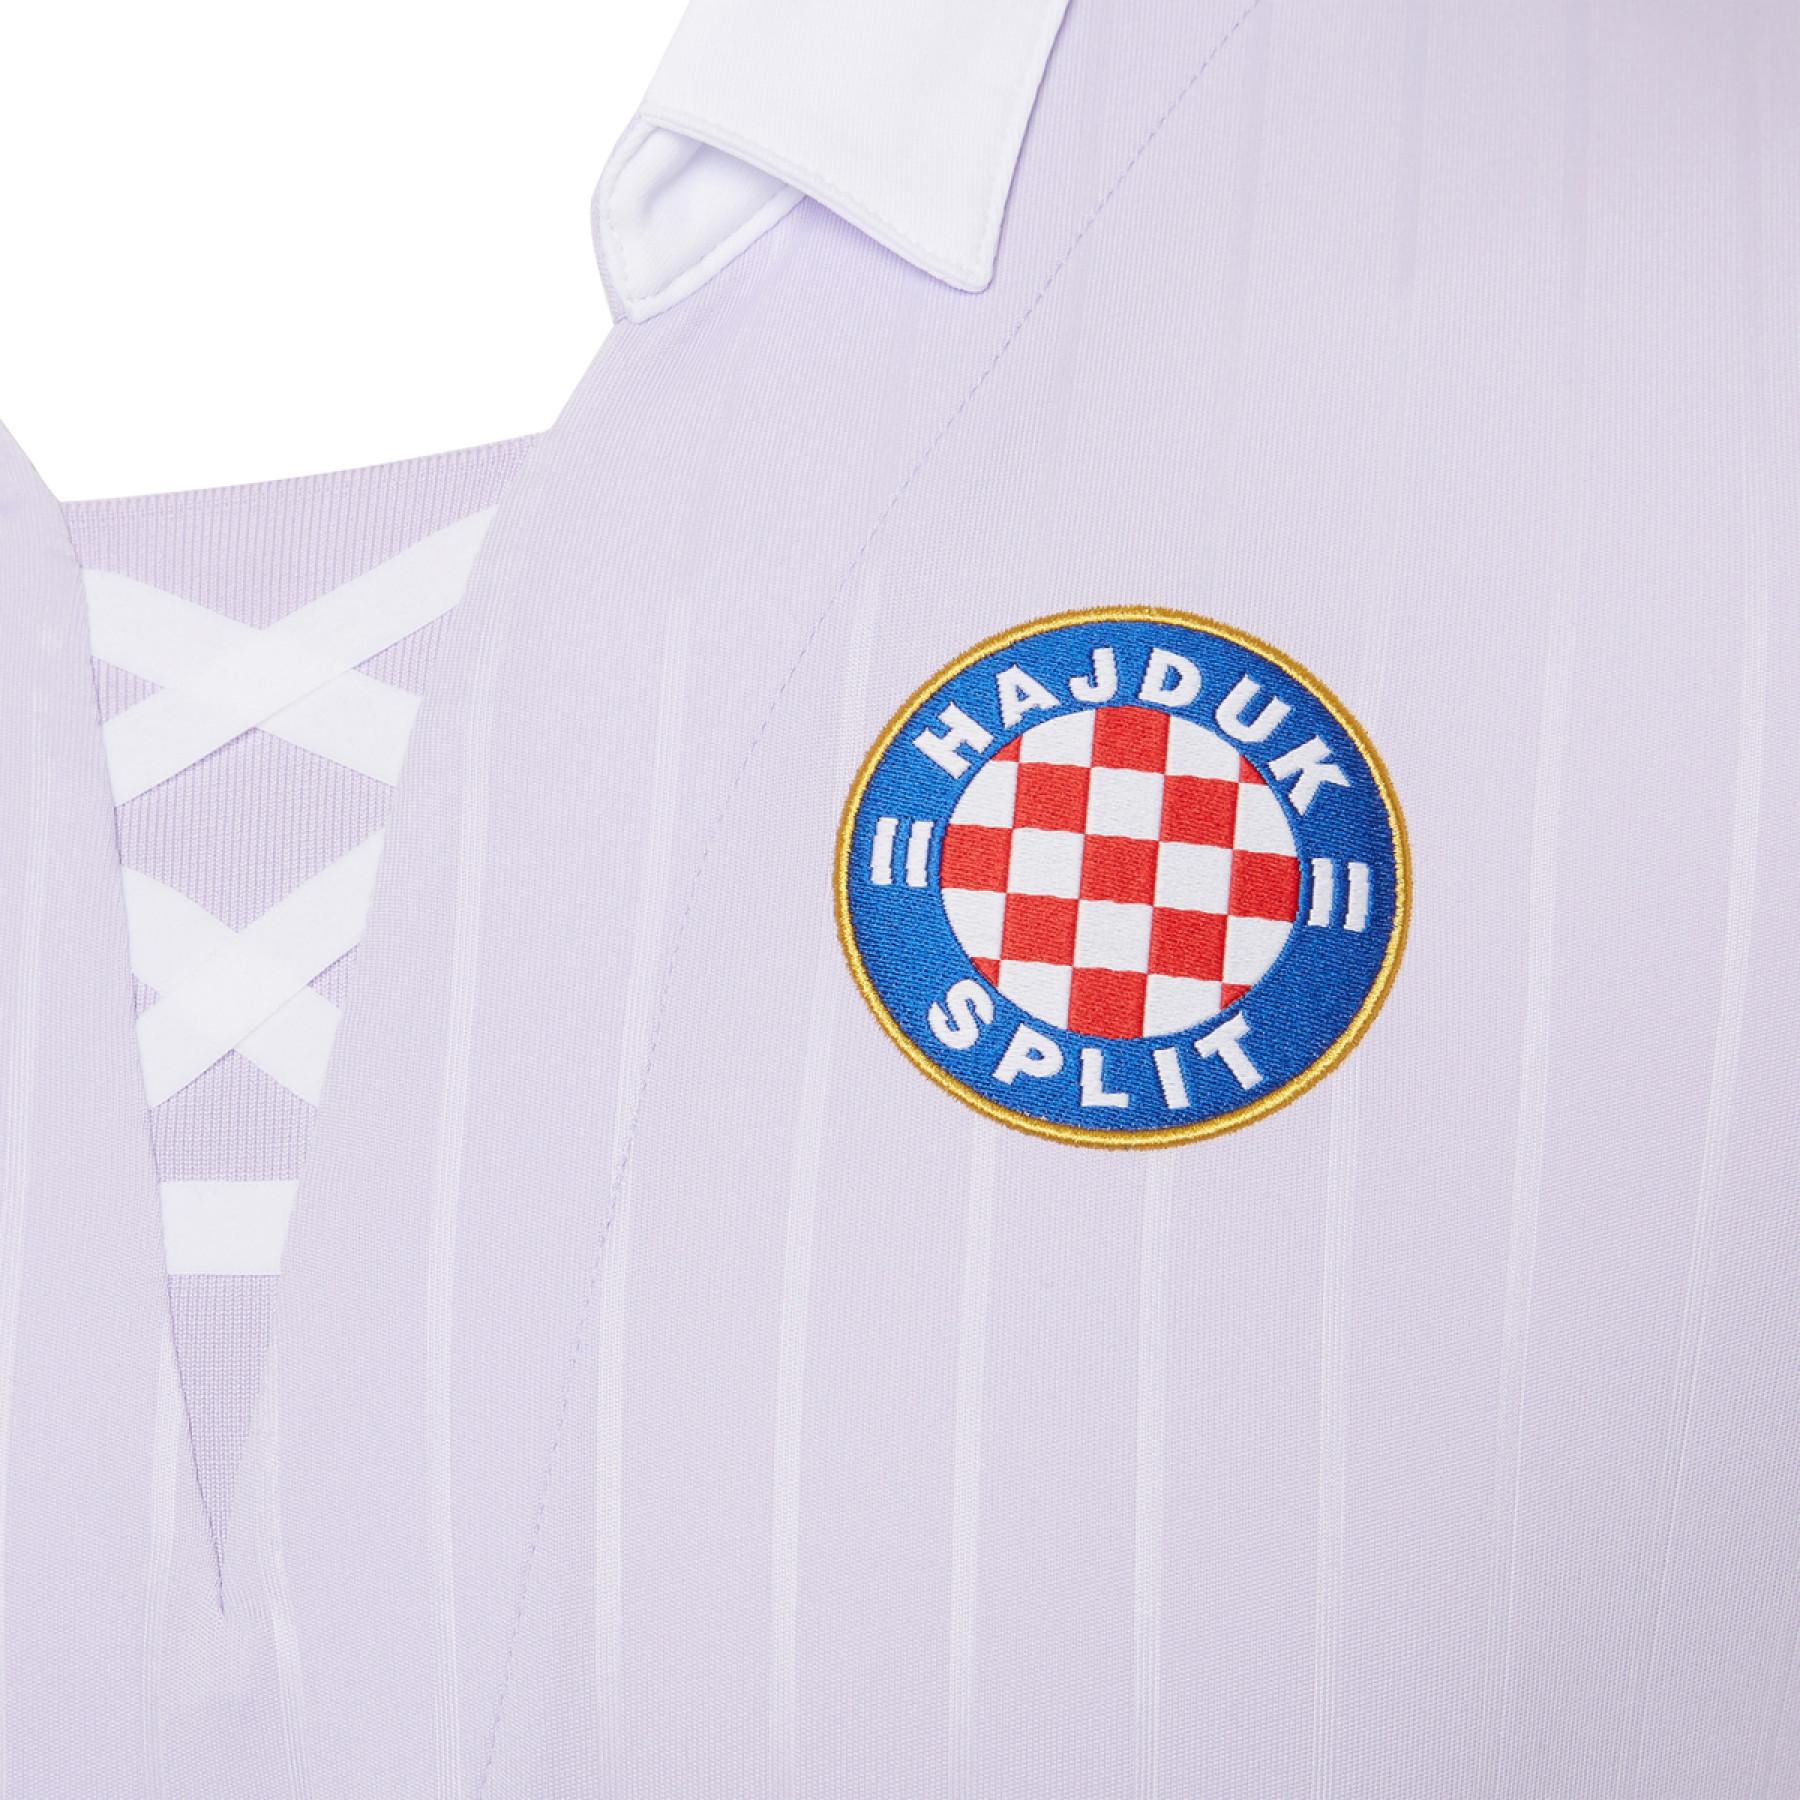 Third jersey Hajduk Split 2020/21